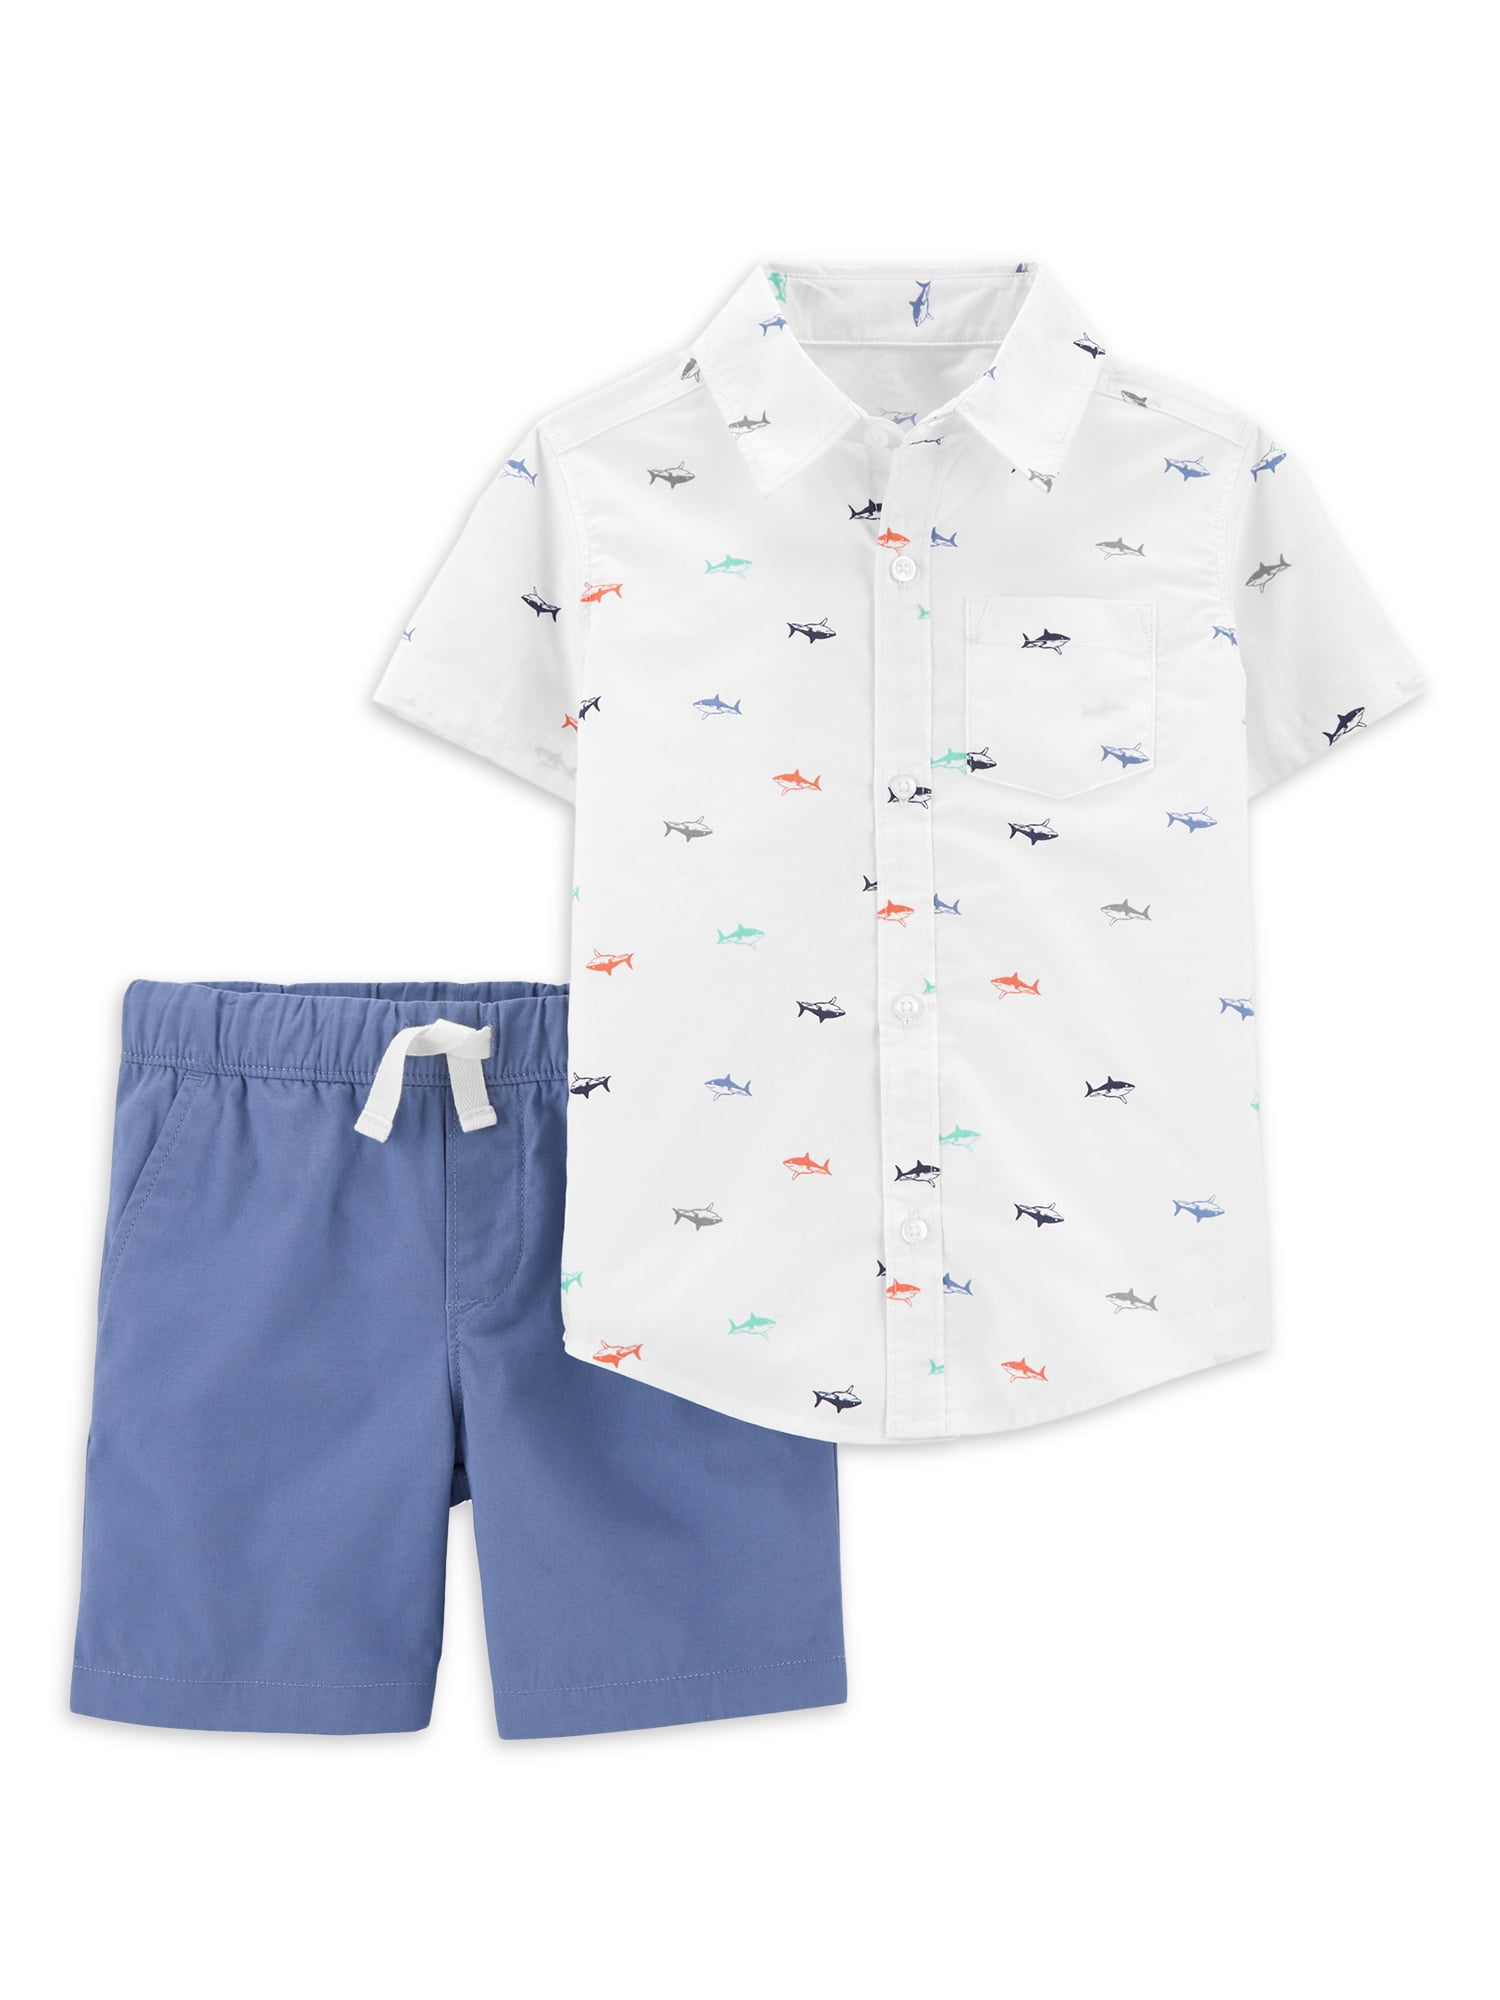 NEW Carter's Boys Shark Shirt & Shorts Set 2pcs White Red Toddler 2T,3T,5T 